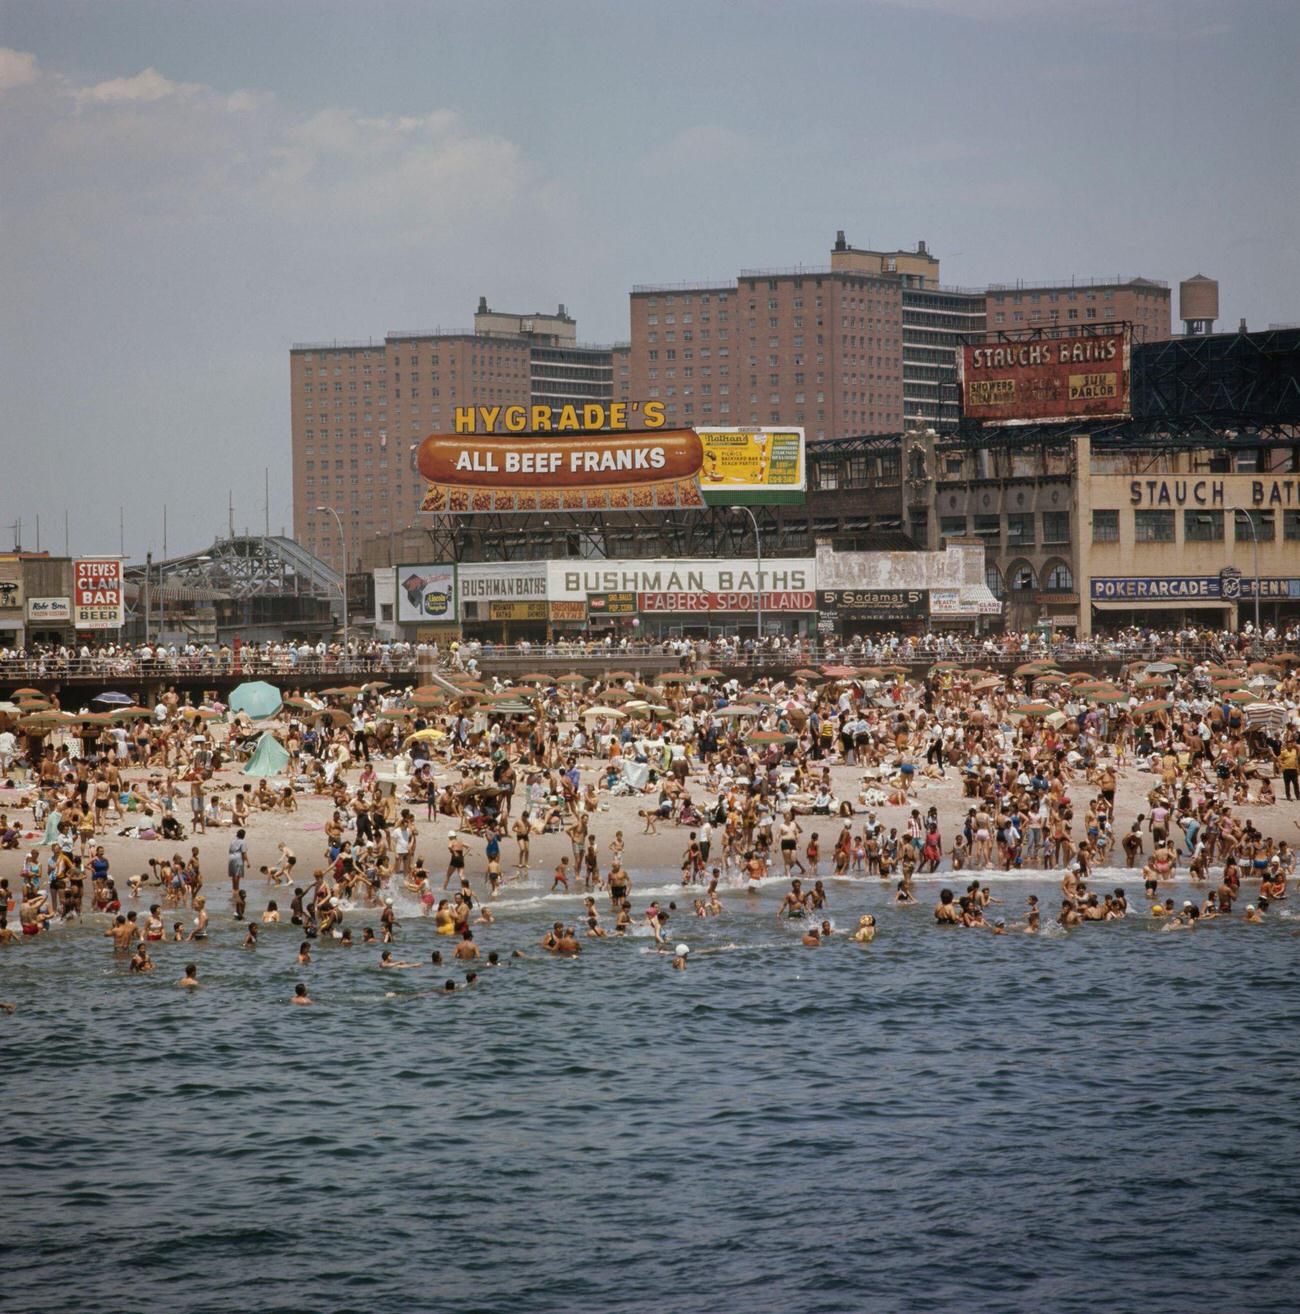 Bushman Baths And Beach At Coney Island, 1969